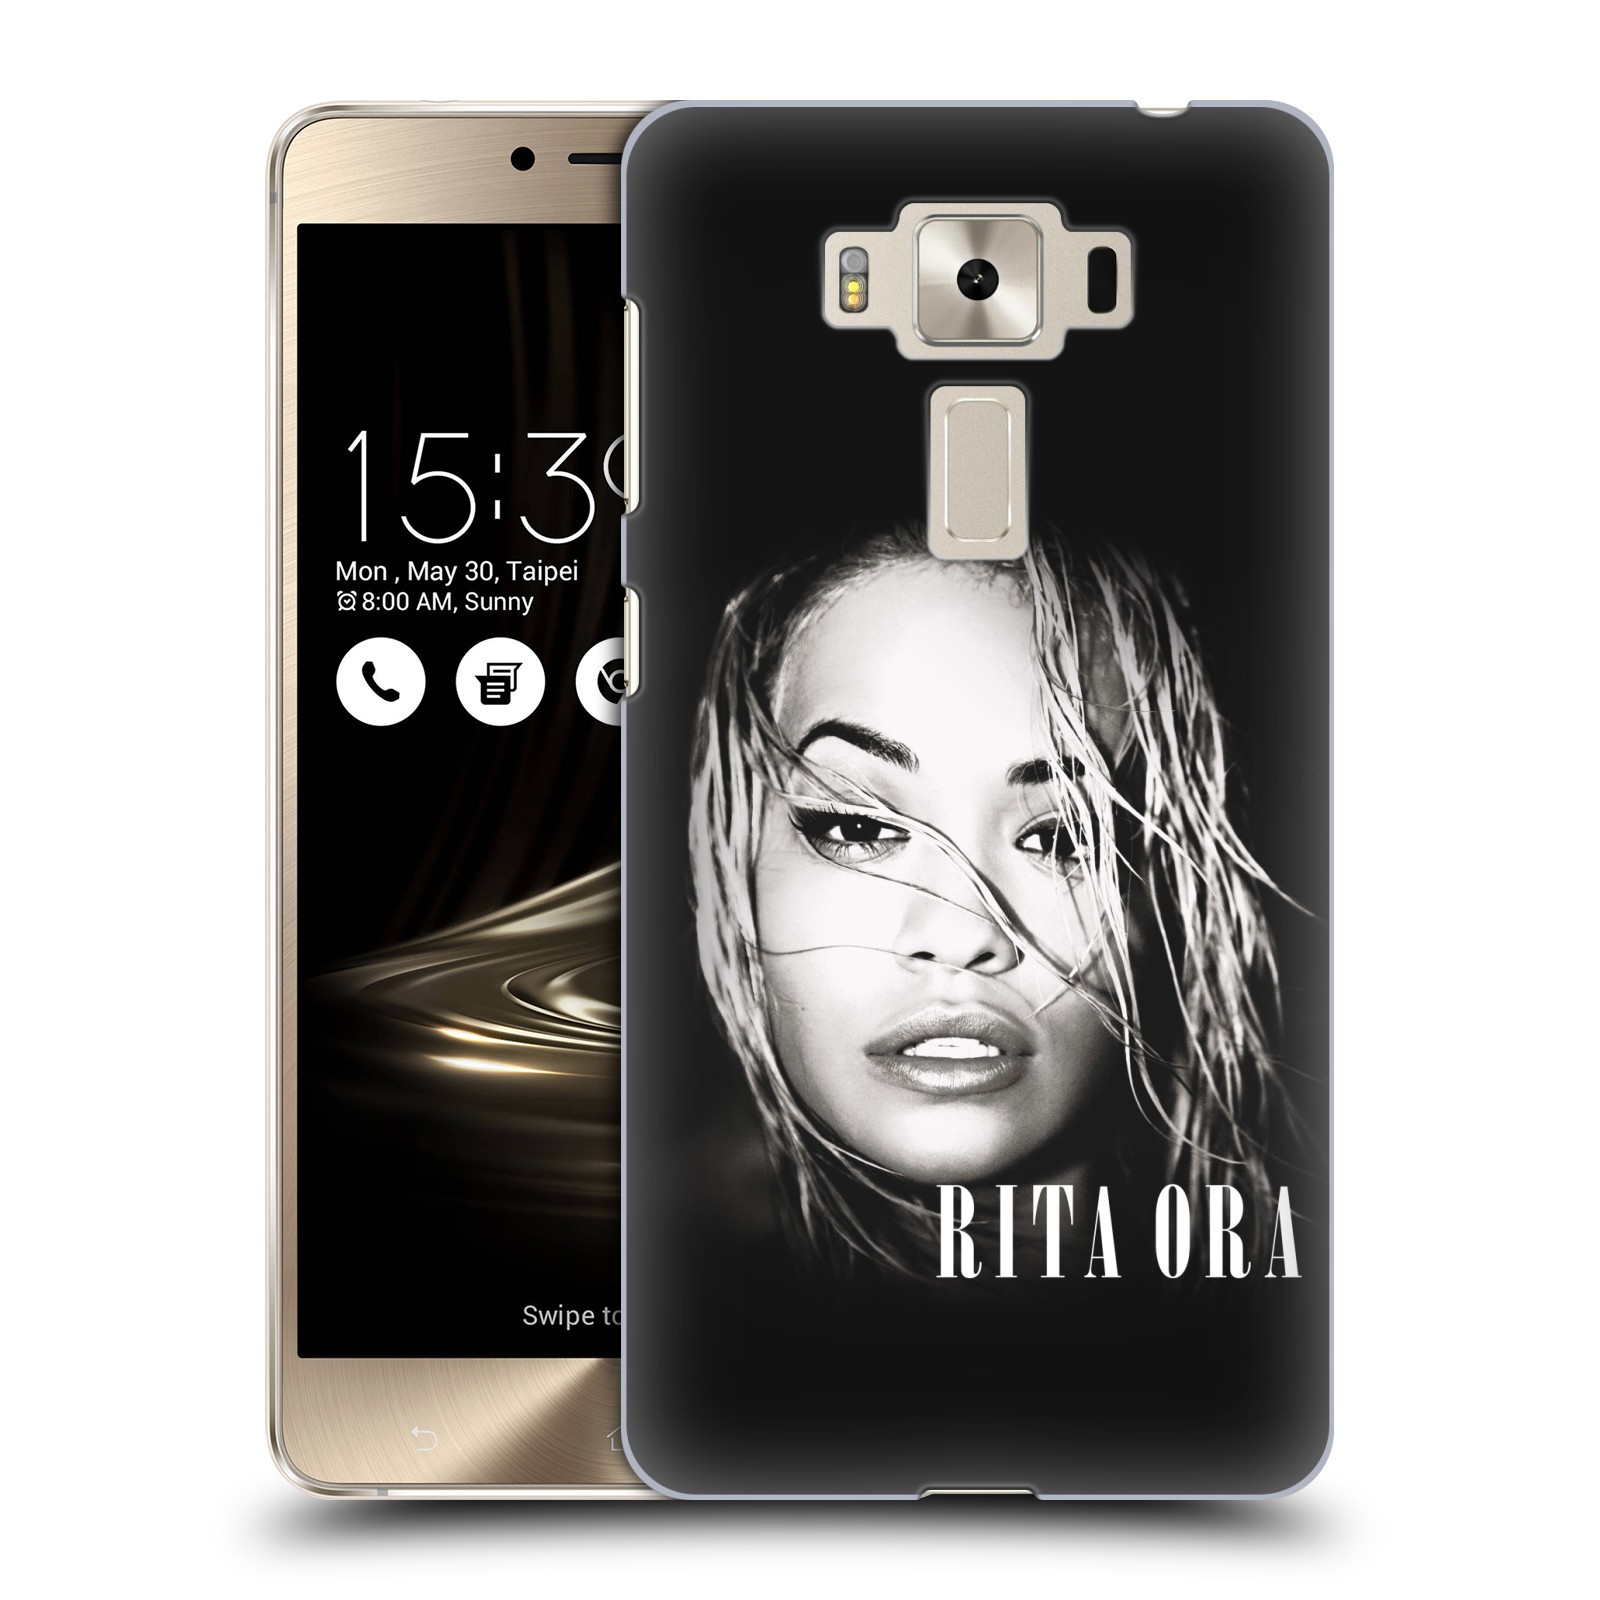 HEAD CASE plastový obal na mobil Asus Zenfone 3 DELUXE ZS550KL zpěvačka Rita Ora foto tvář